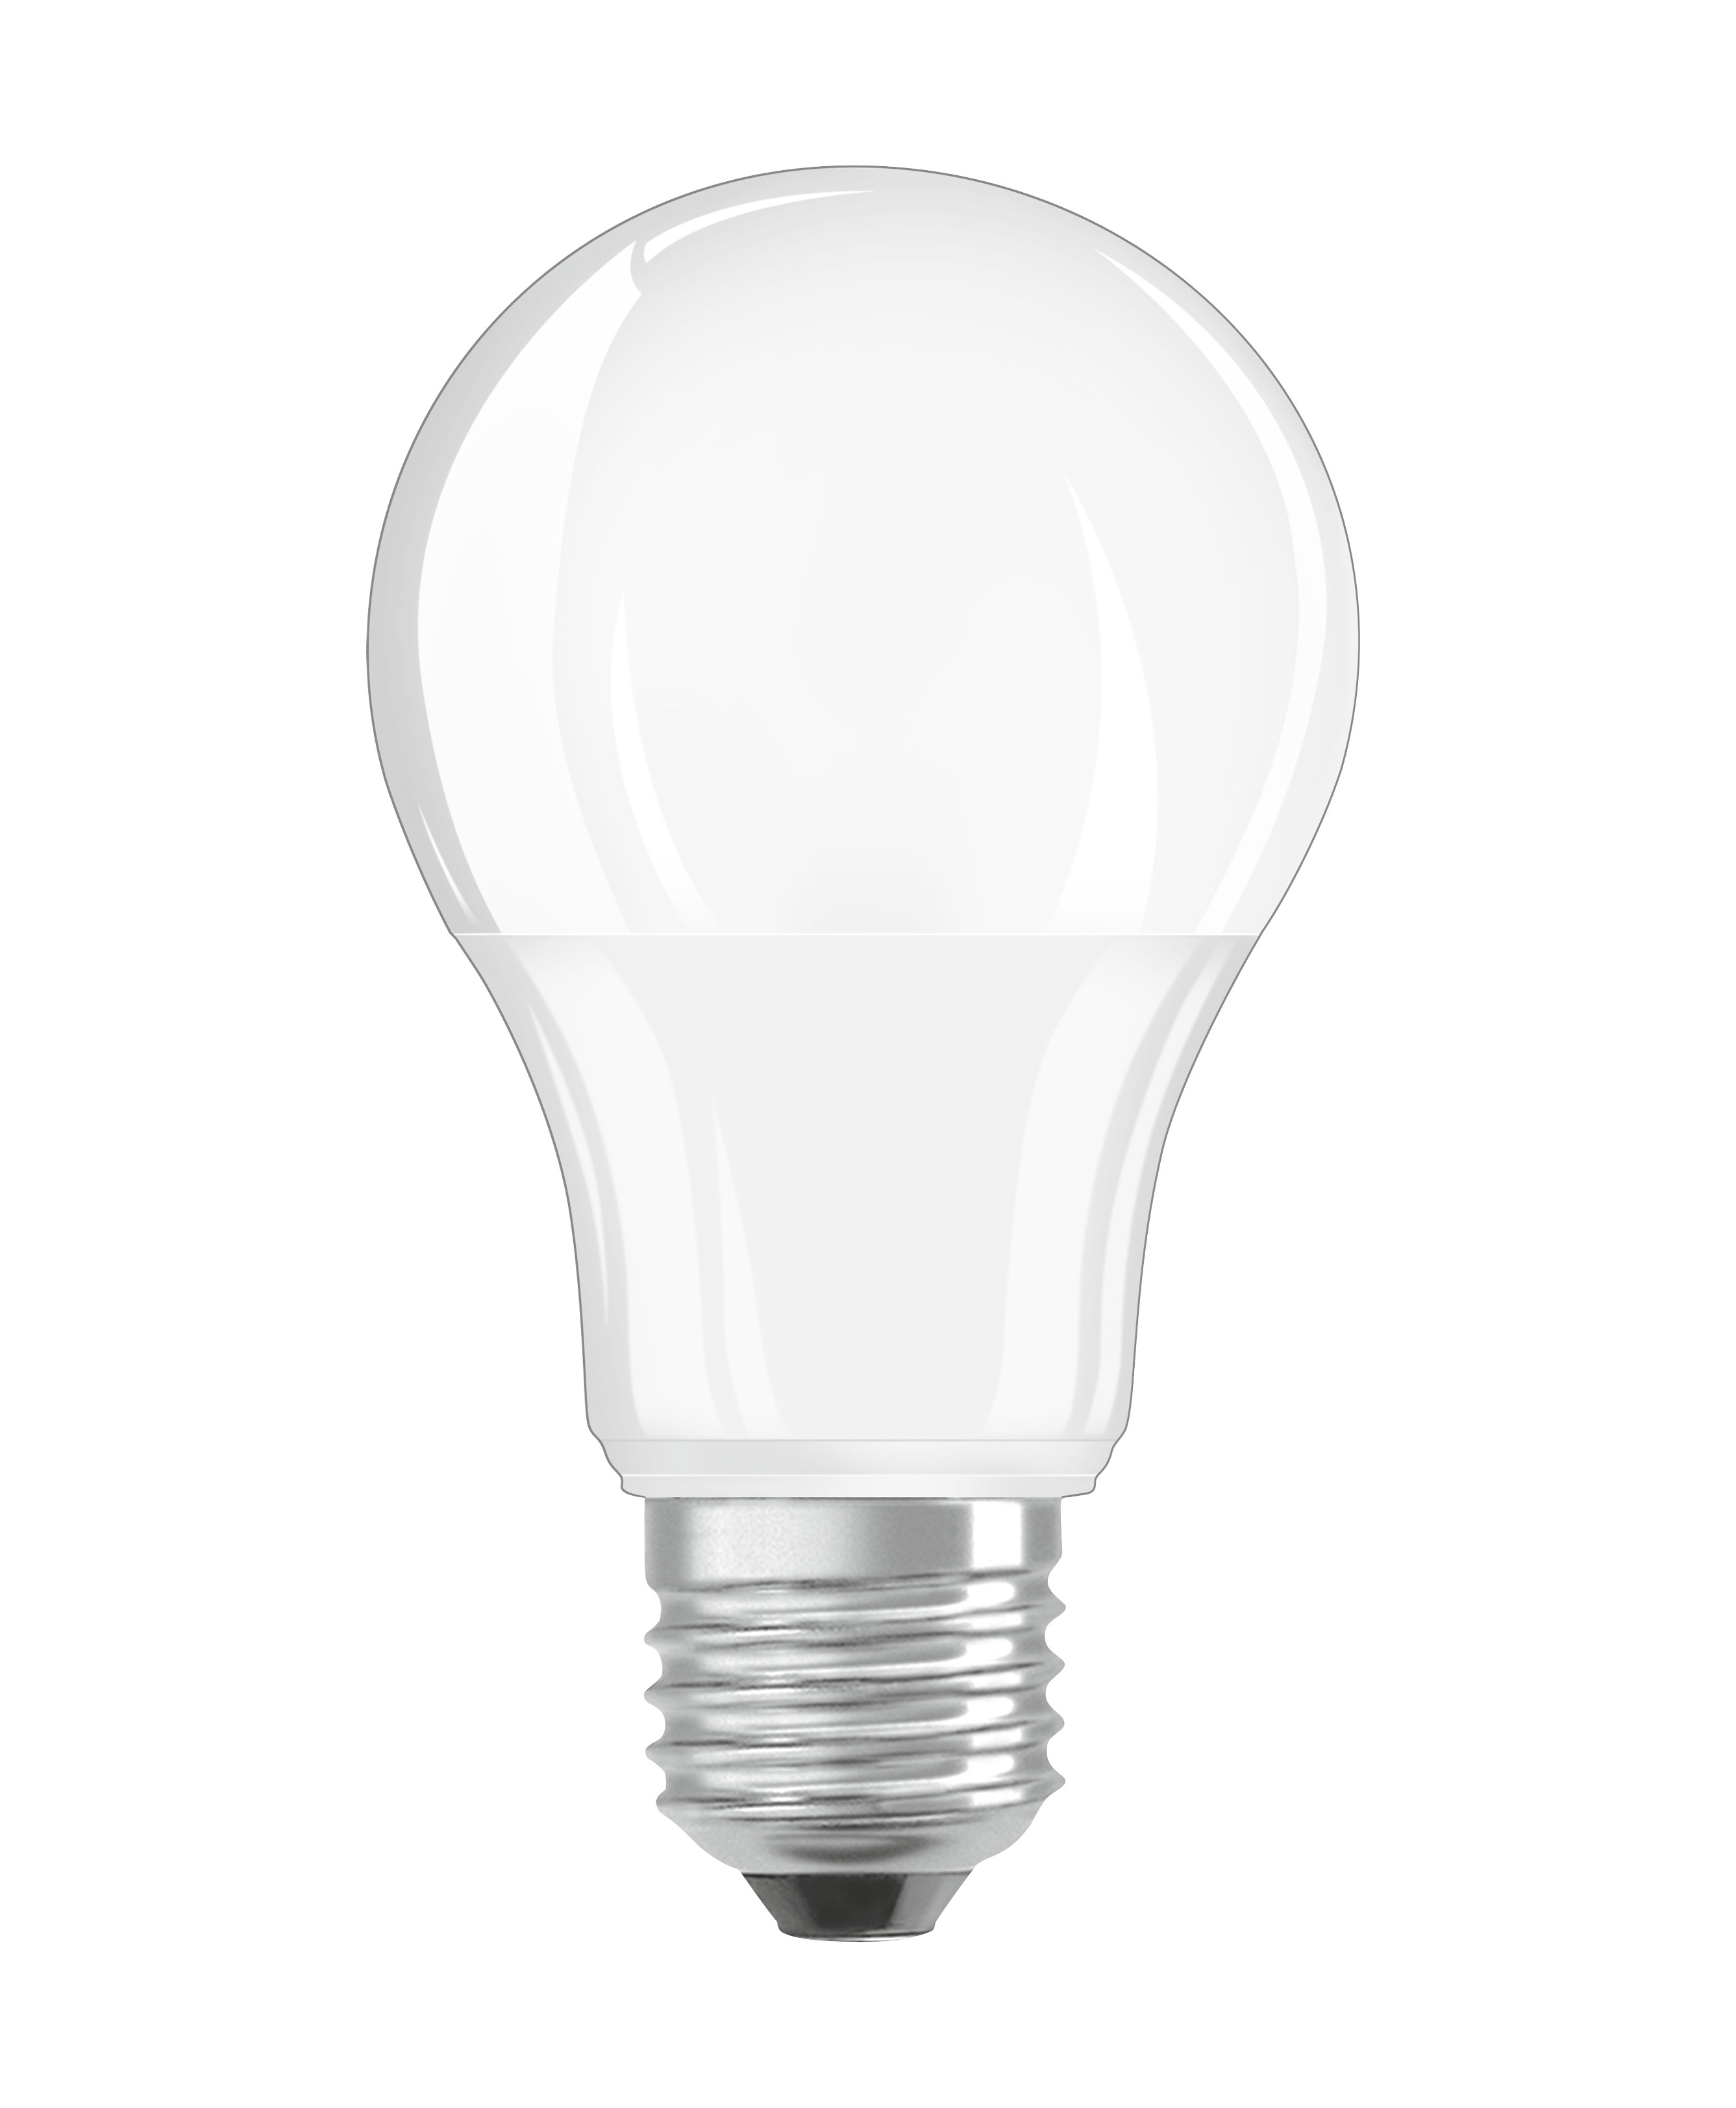 Lumen Warmweiß 1055 Lampe OSRAM  DAYLIGHT CLASSIC LED LED A SENSOR